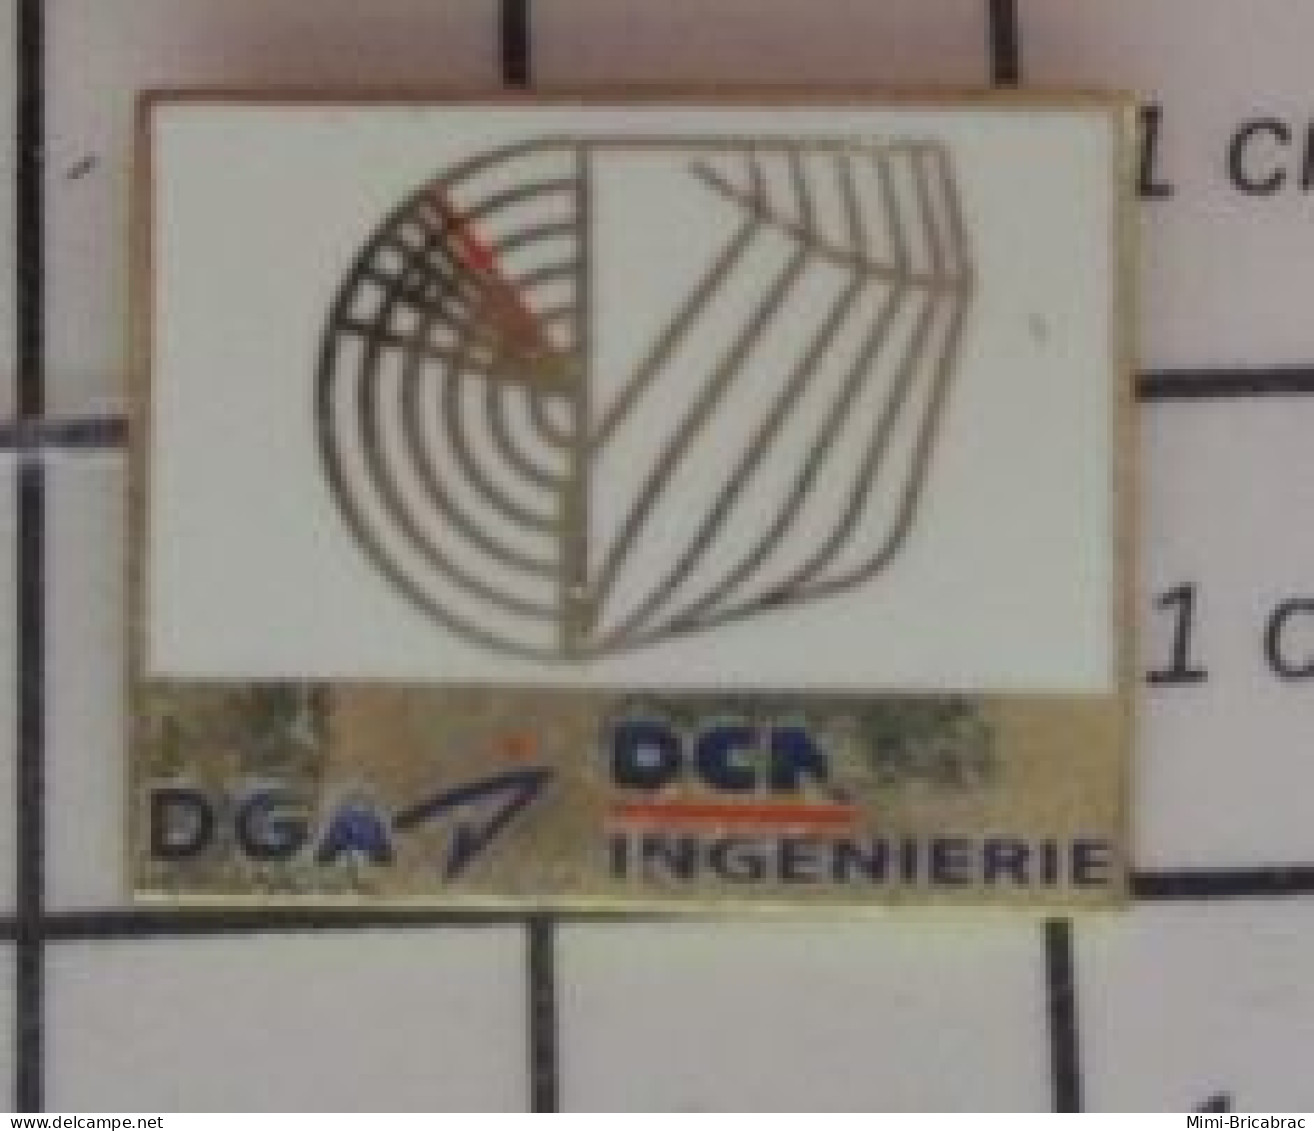 1616c Pin's Pins / Beau Et Rare / ADMINISTRATIONS / DGA DELEGATION GENERALE A L'ARMEMENT DCI INGENIERIE - Administration